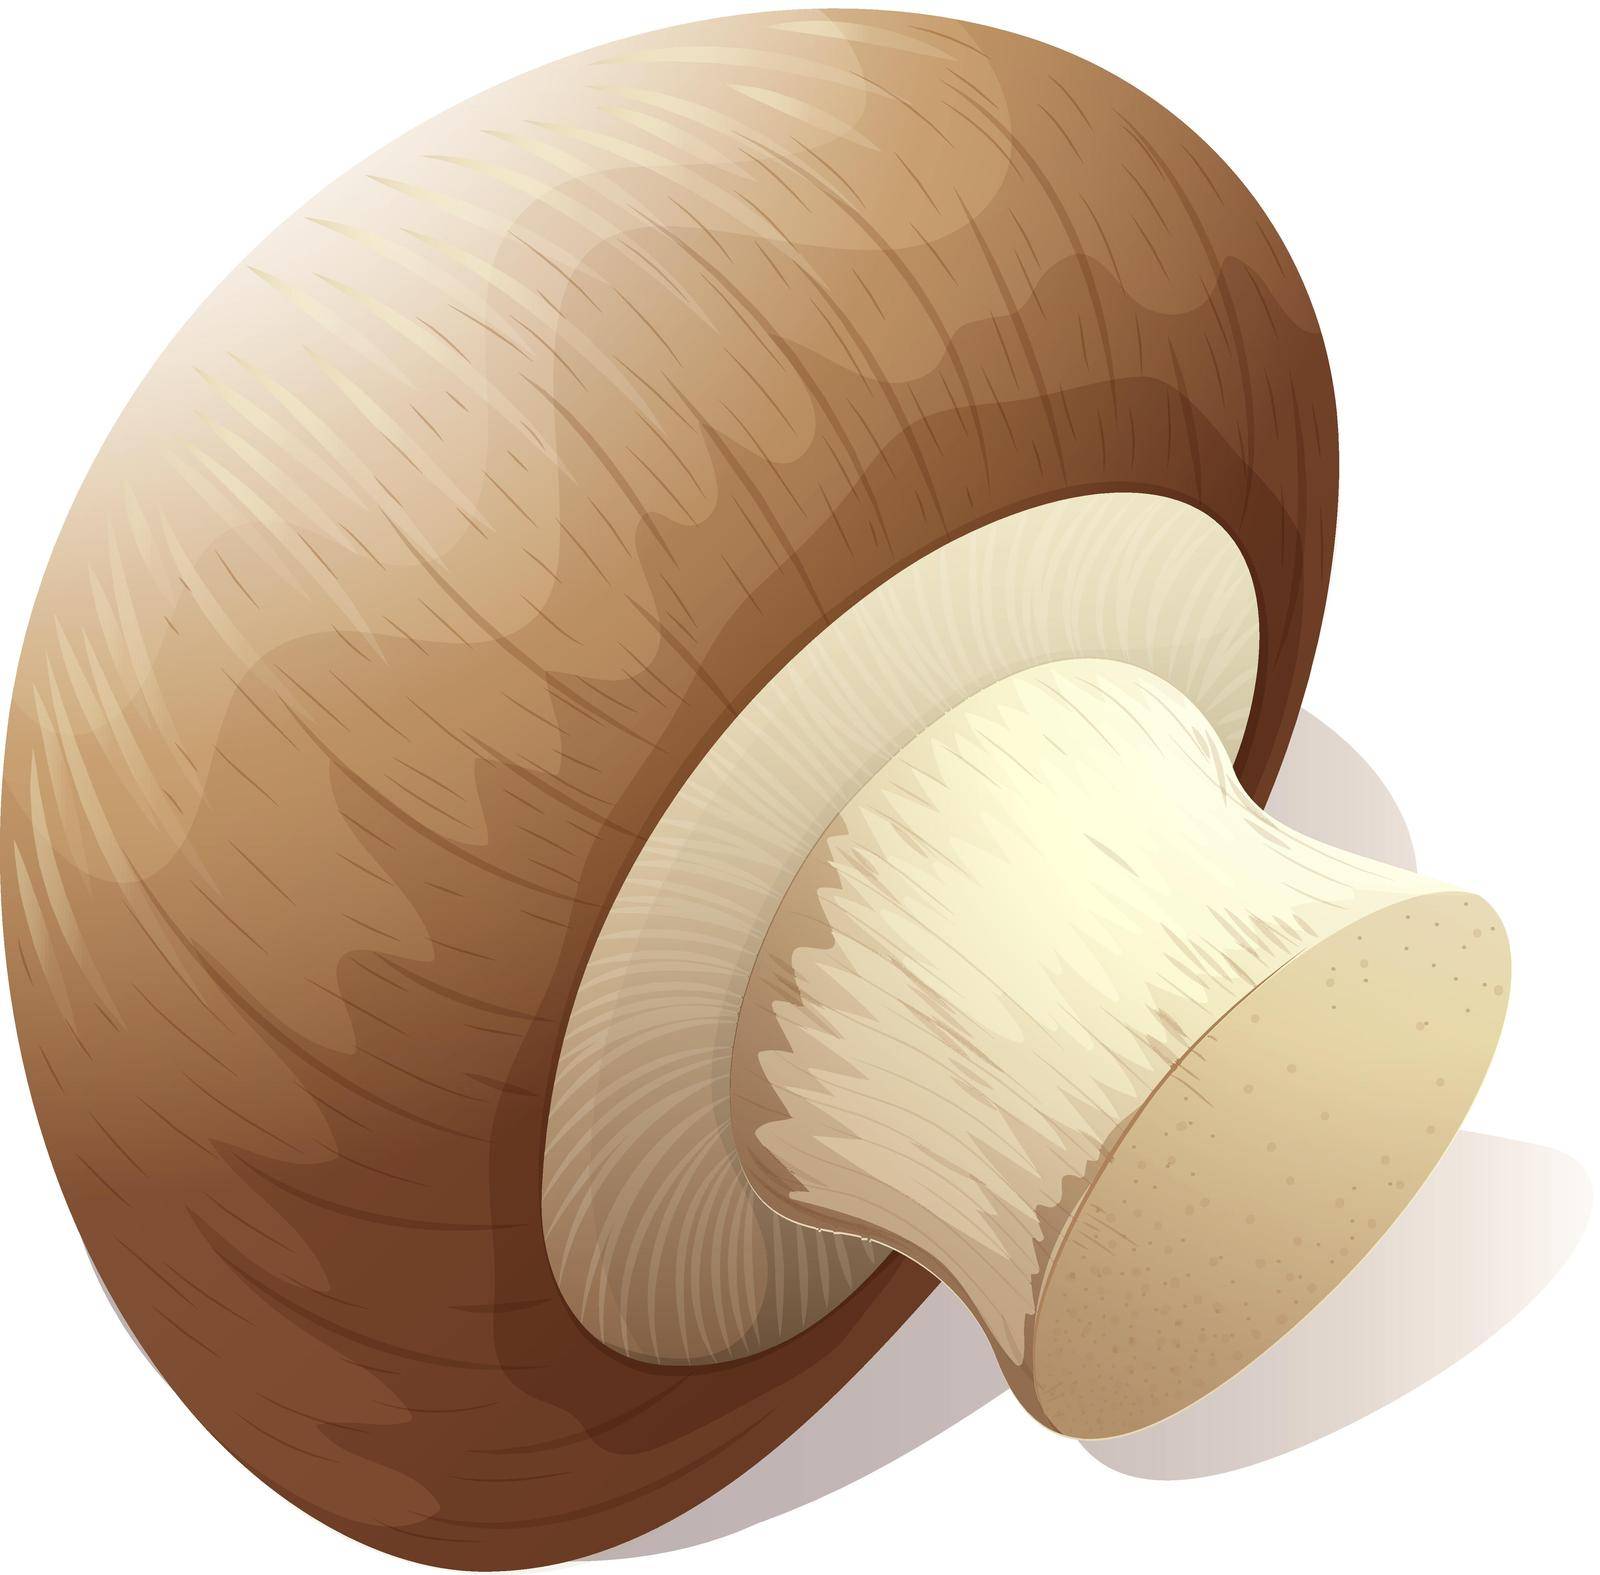 Single mushroom on white by iimages